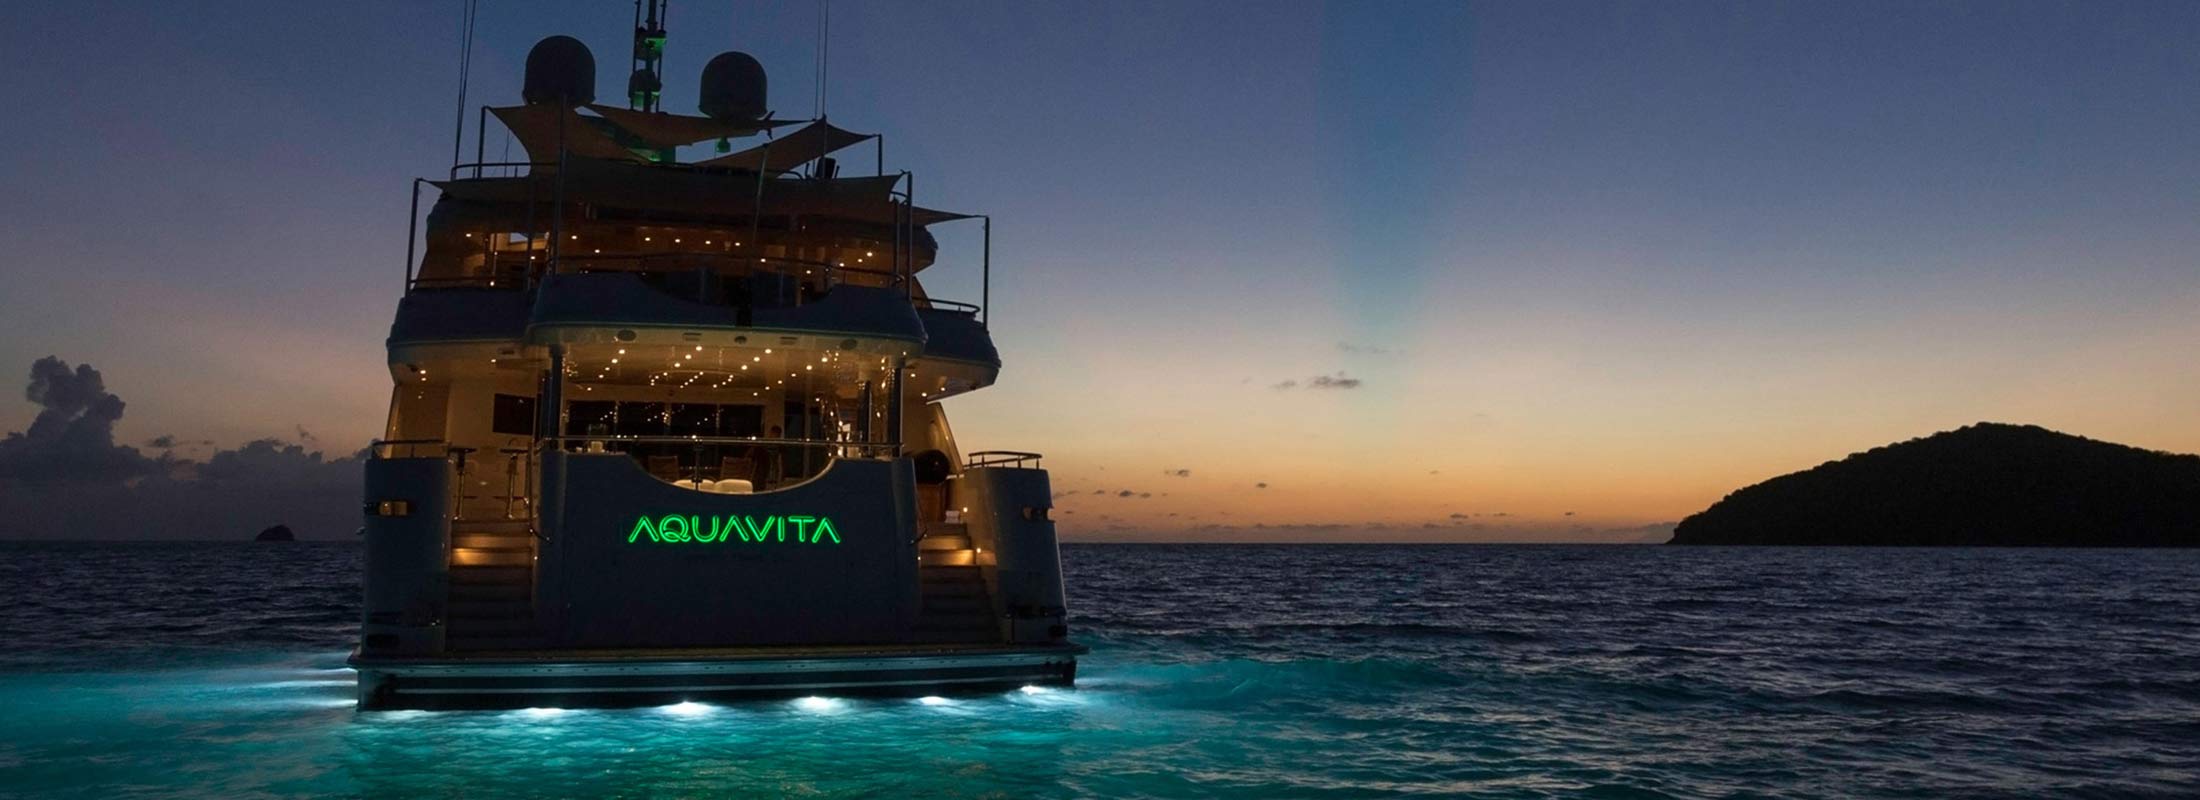 Aquavita Motor Yacht for Charter Caribbean Sea slider 2